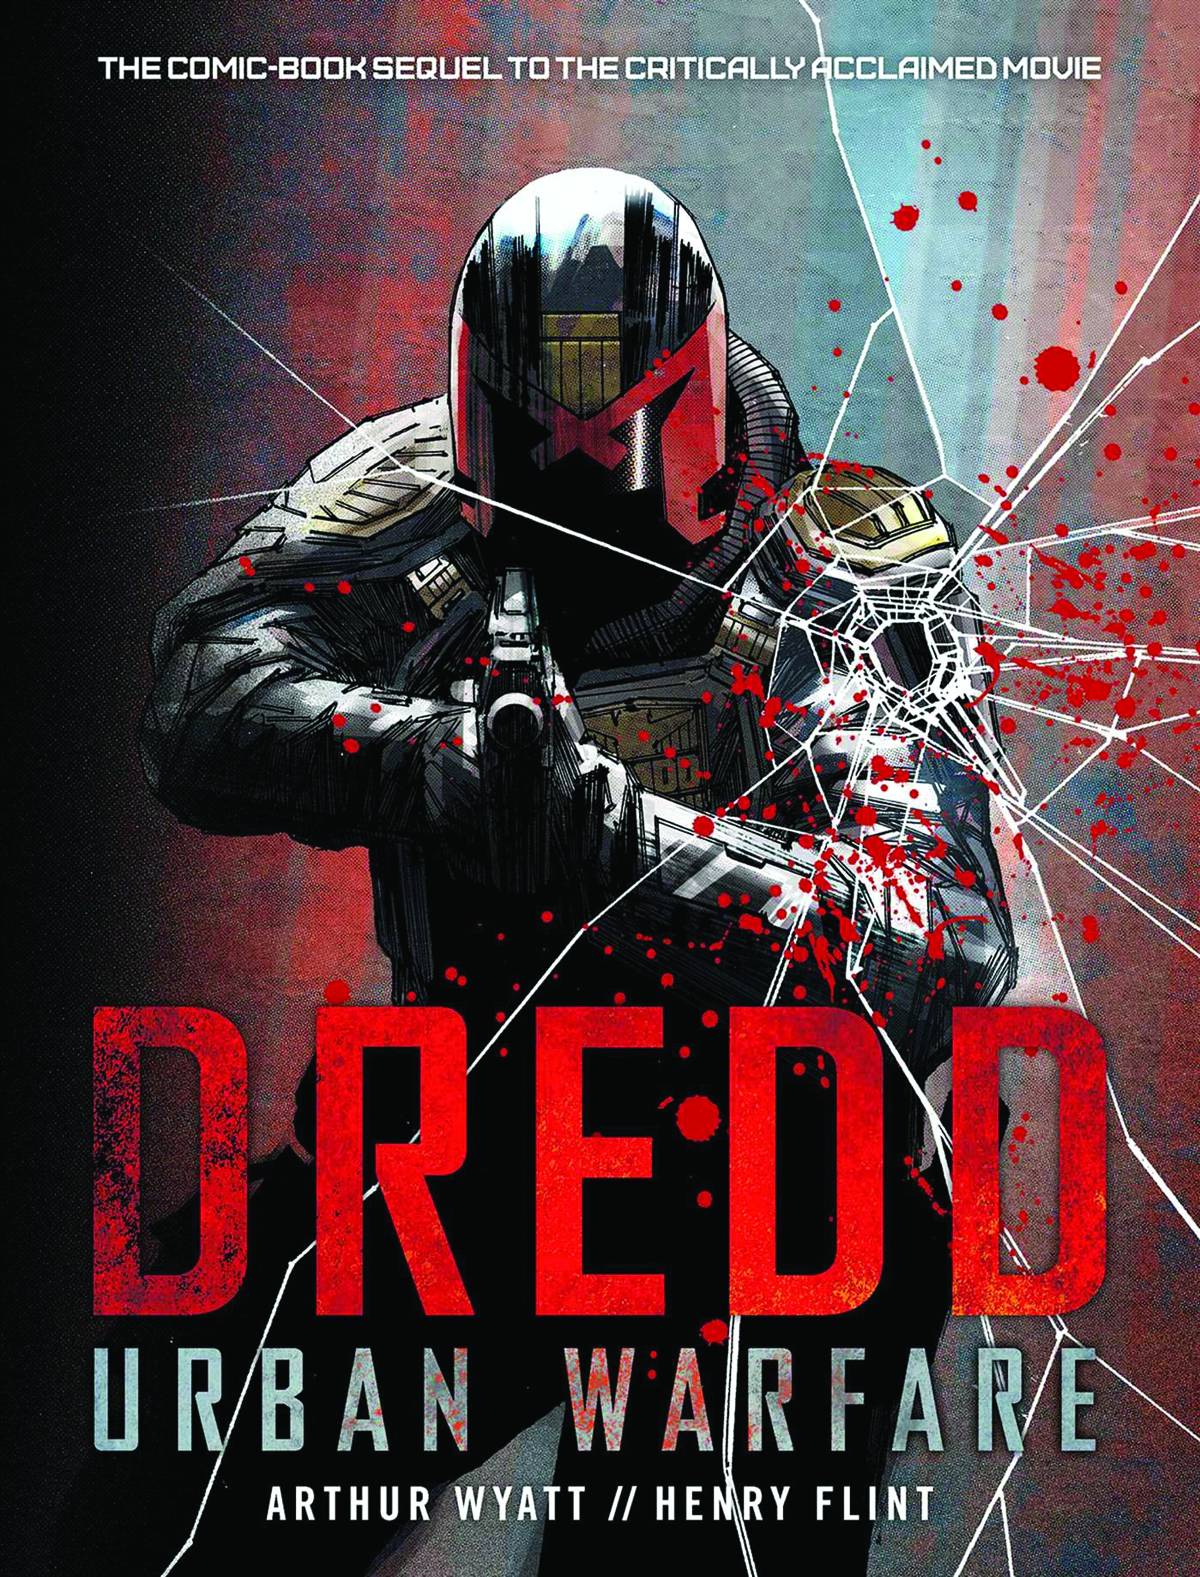 Dredd Urban Warfare Hardcover